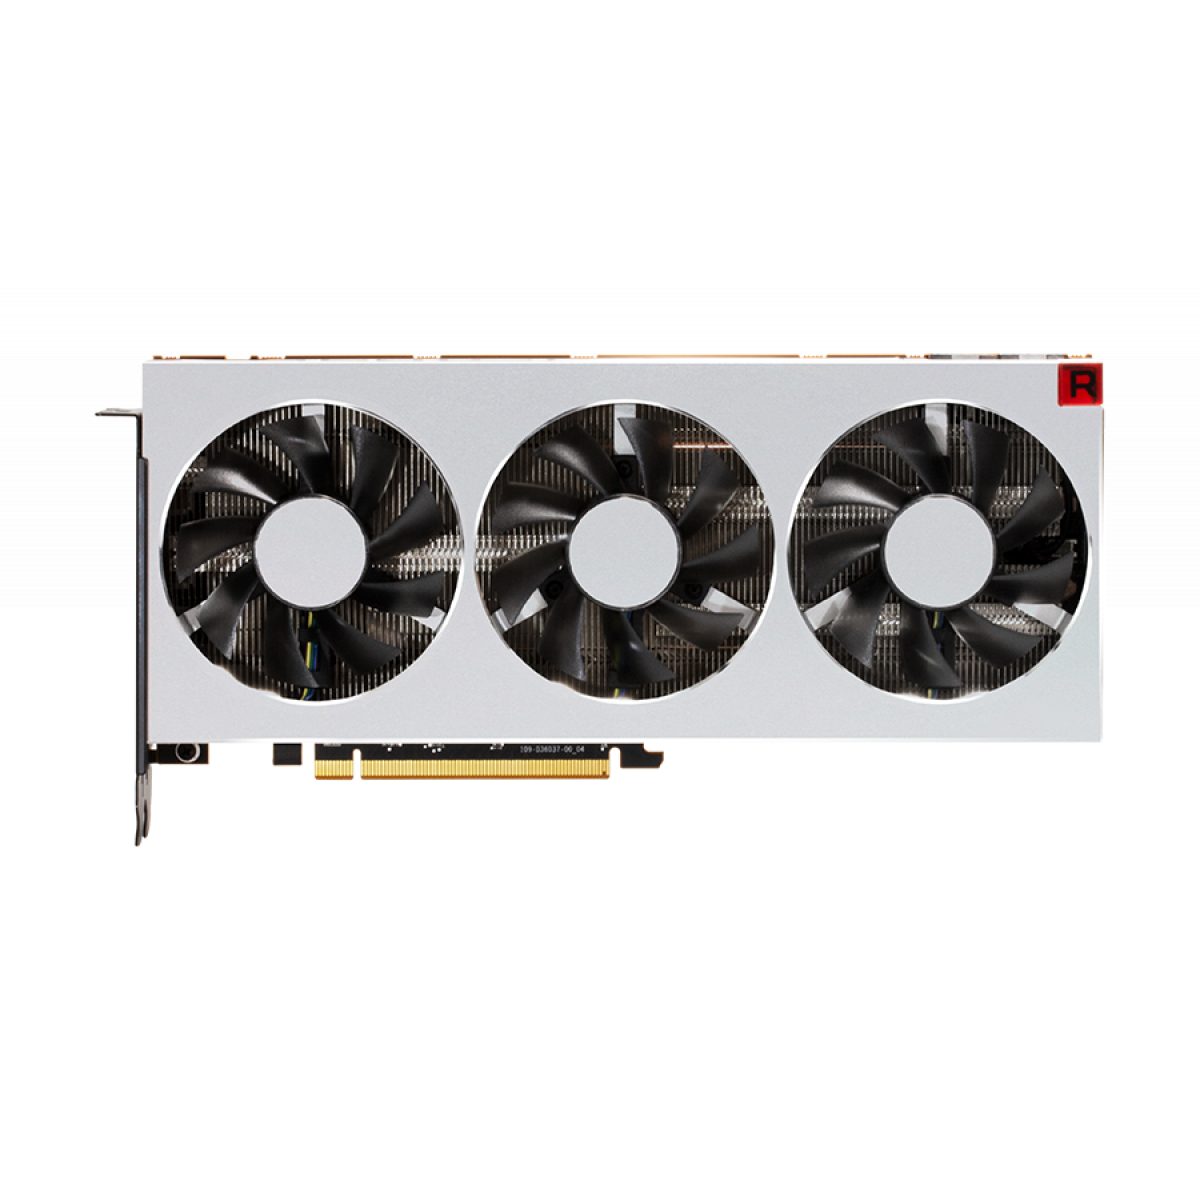 PowerColor Radeon VII 16GB HBM2 New ( 3 Fan )